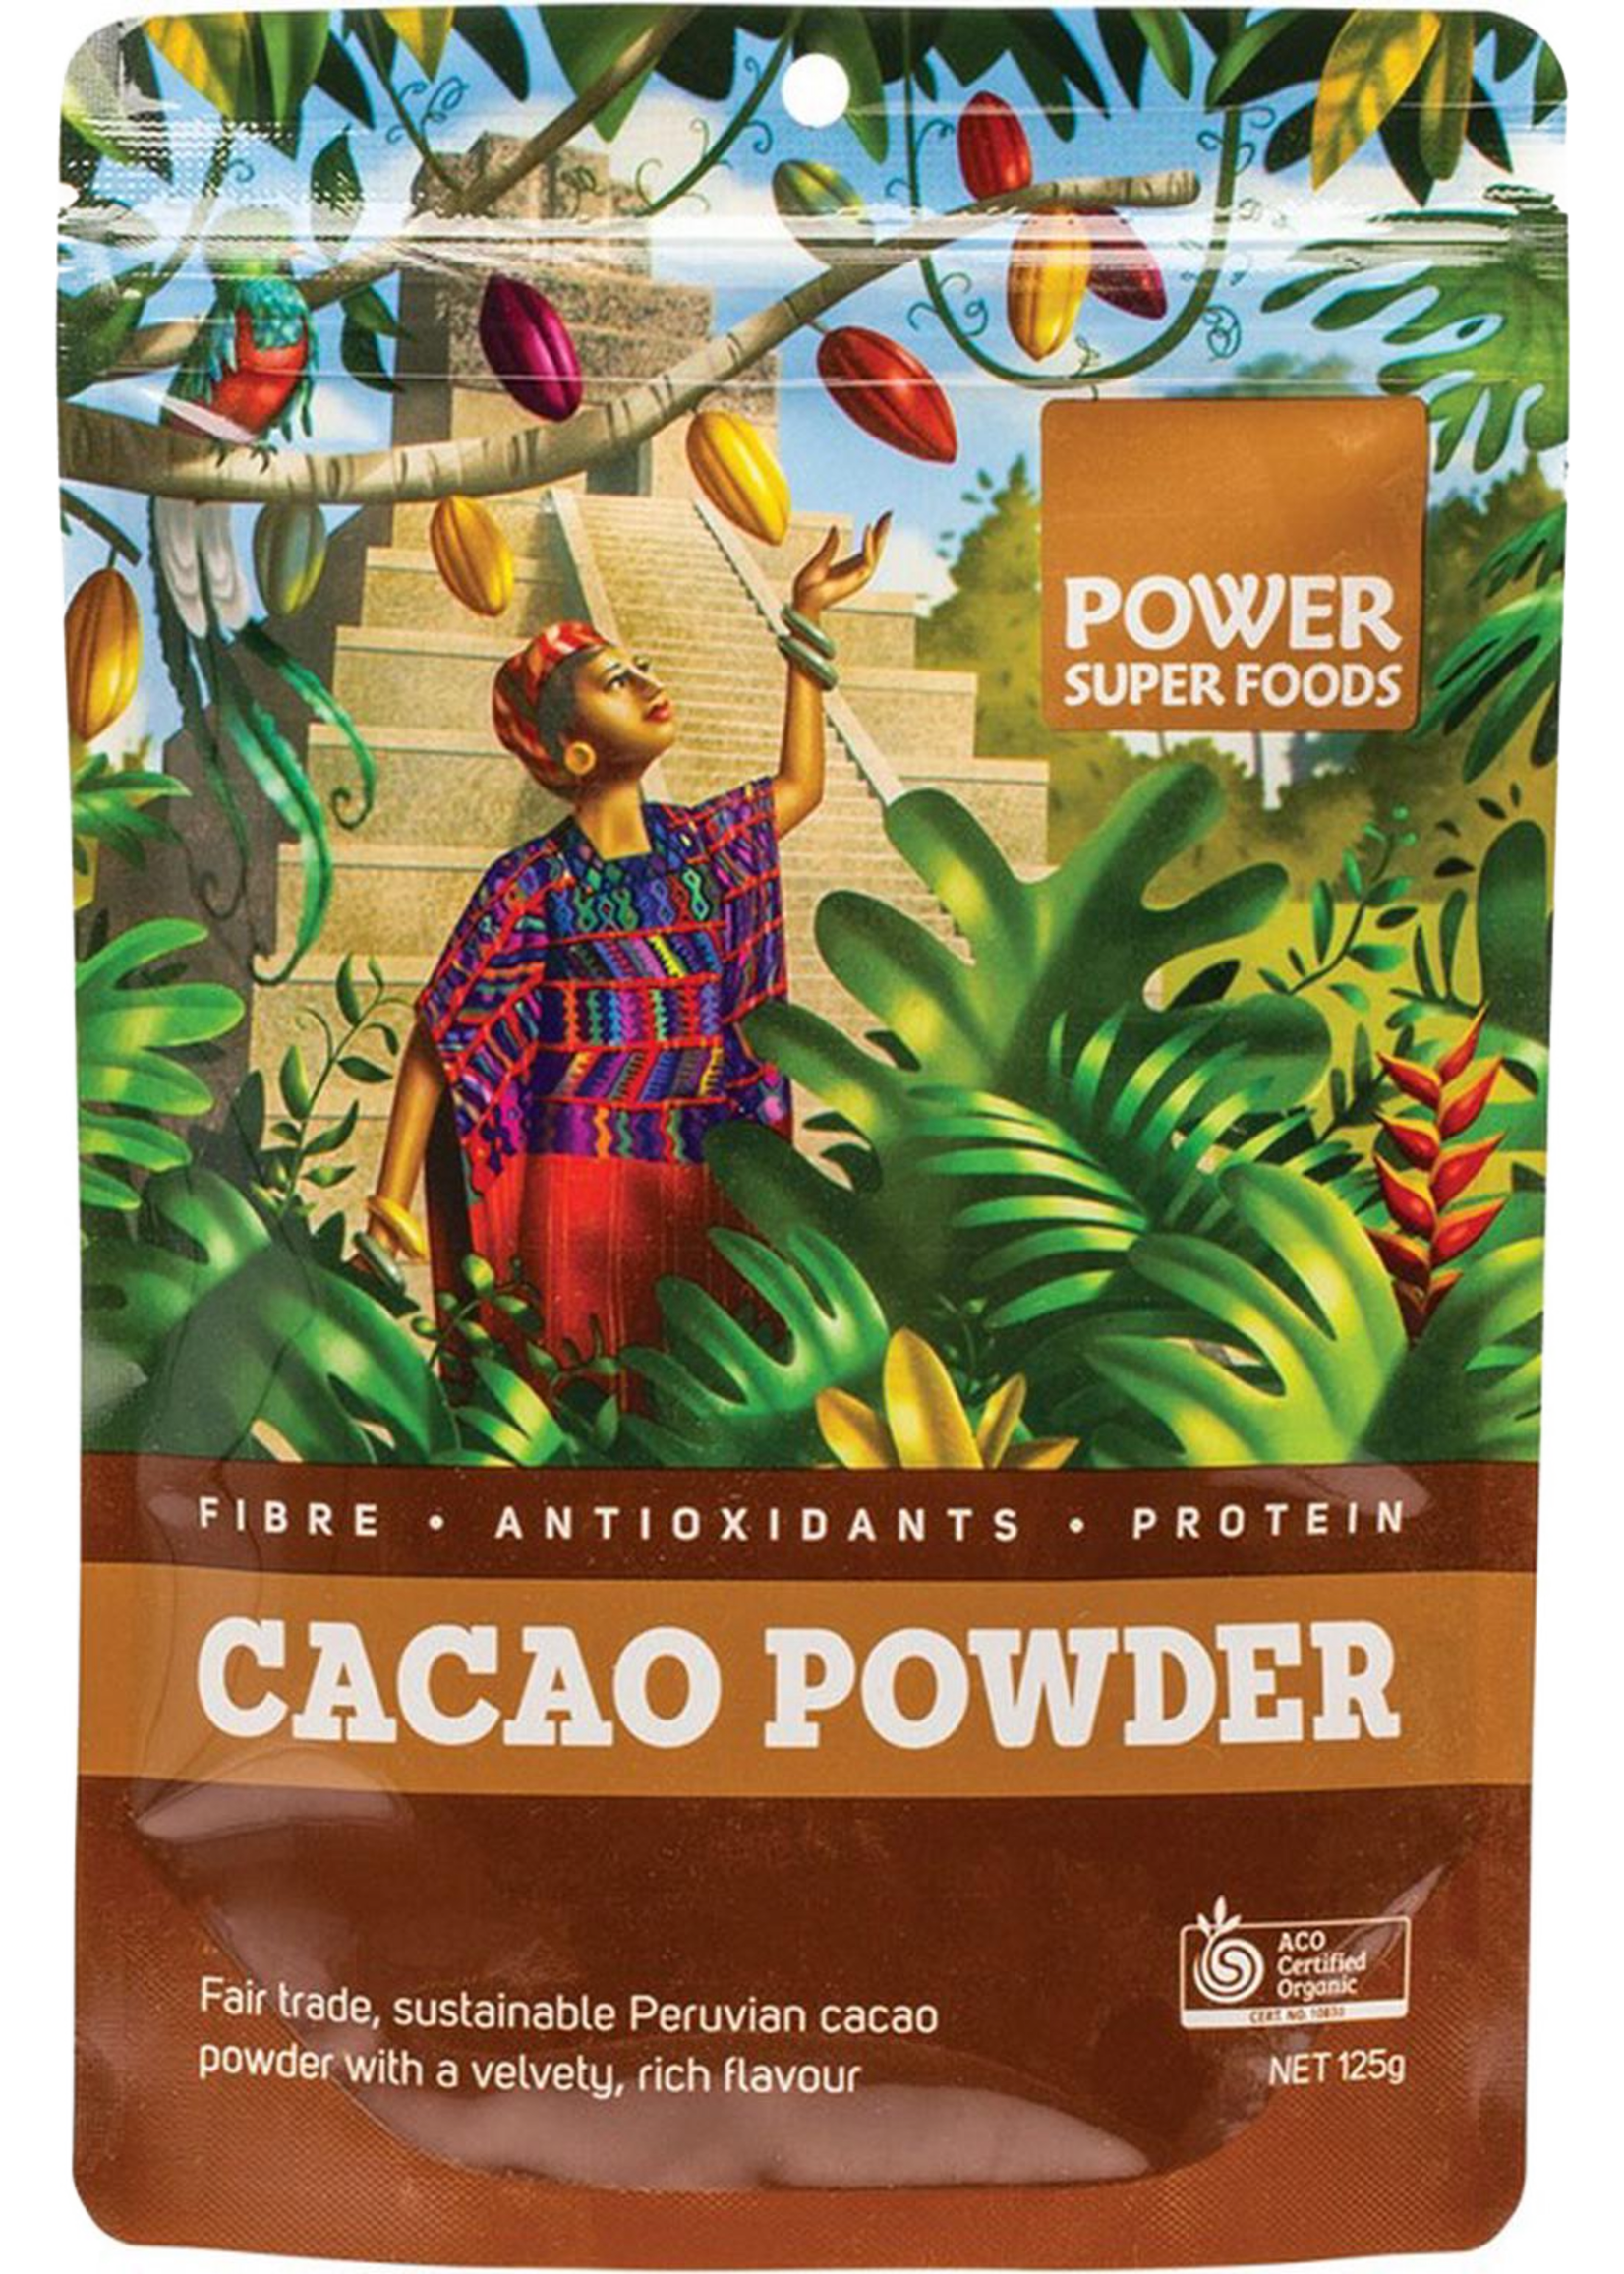 POWER SUPER FOODS Power Super Foods Organic Cacao Powder 125g